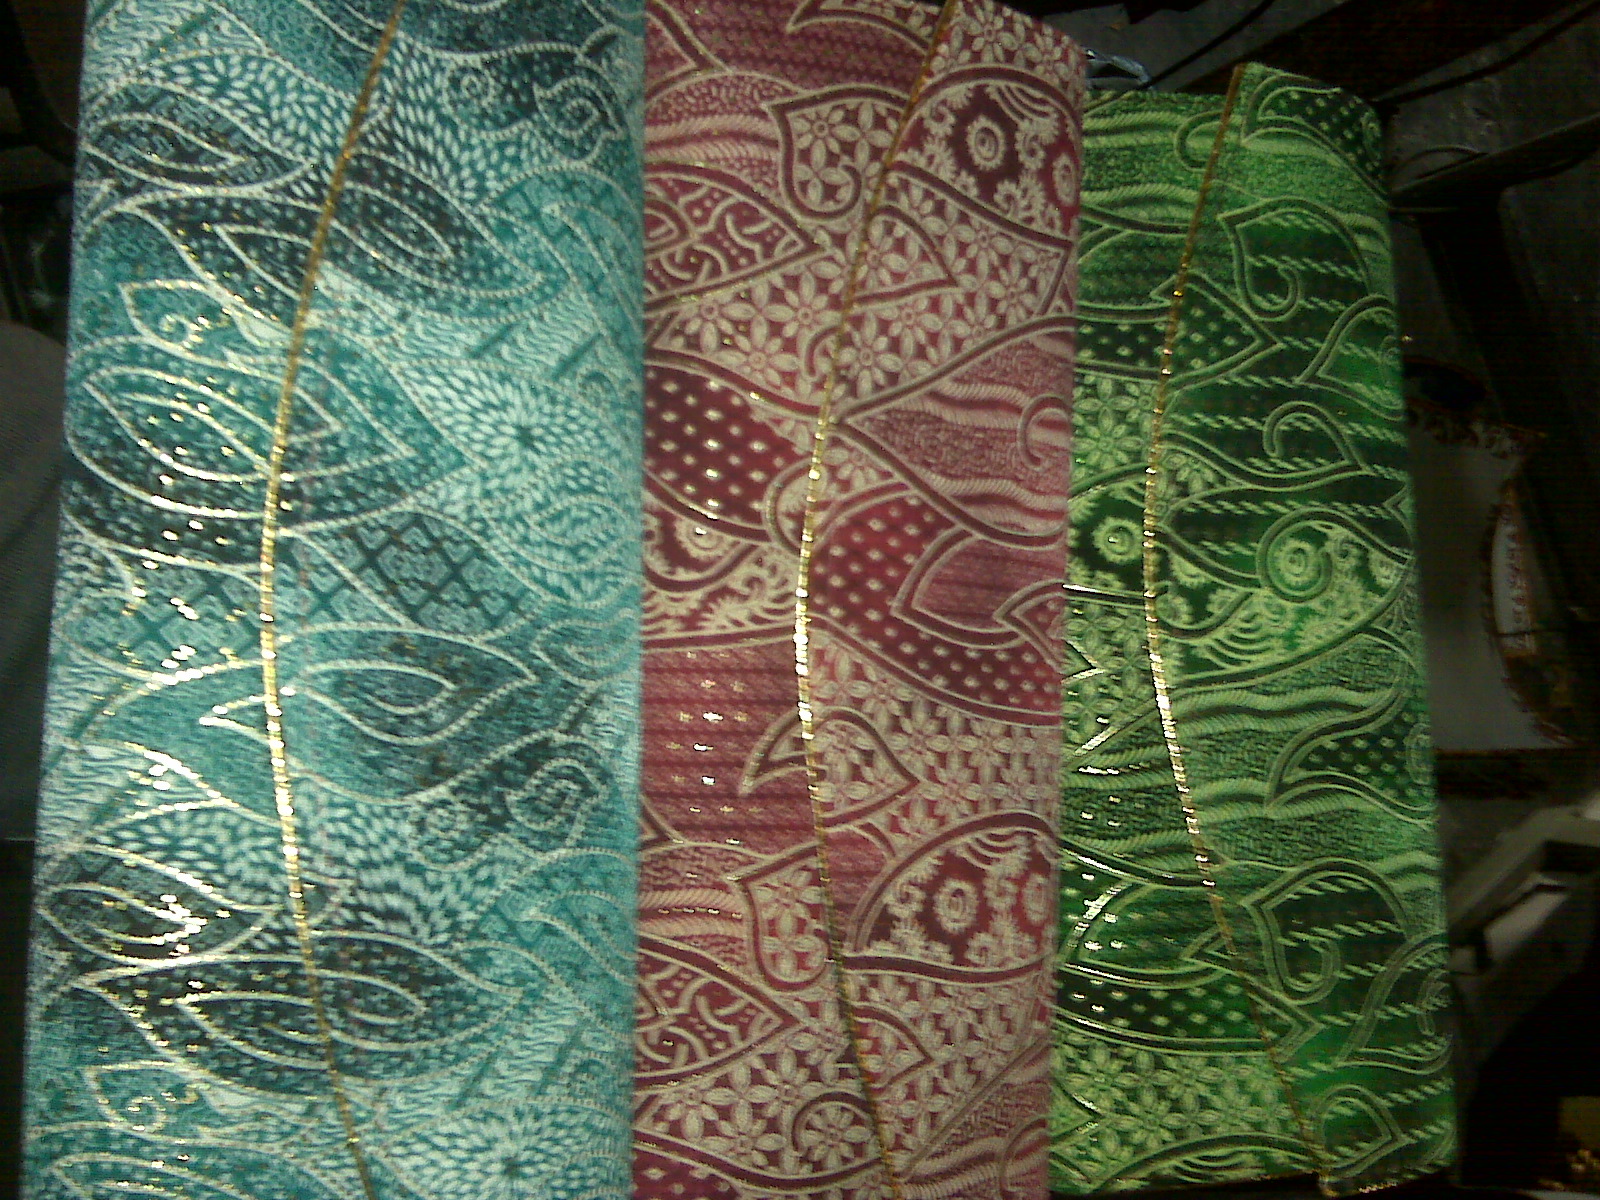 Aneka Kerajinan Dompet dan Clutch Batik Yogyakarta 